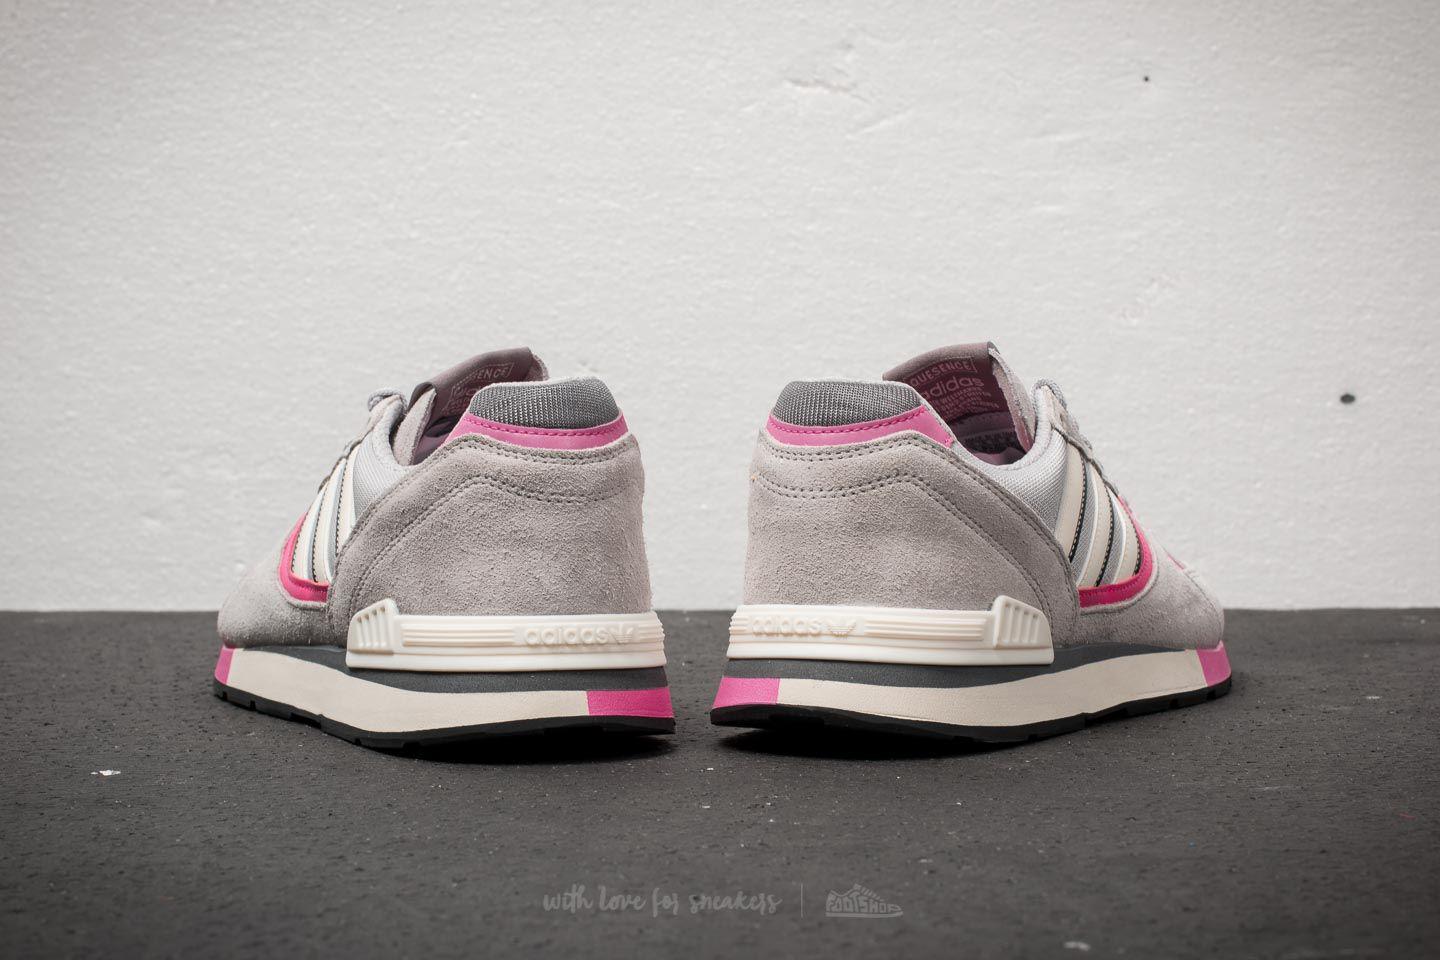 adidas quesence grey pink